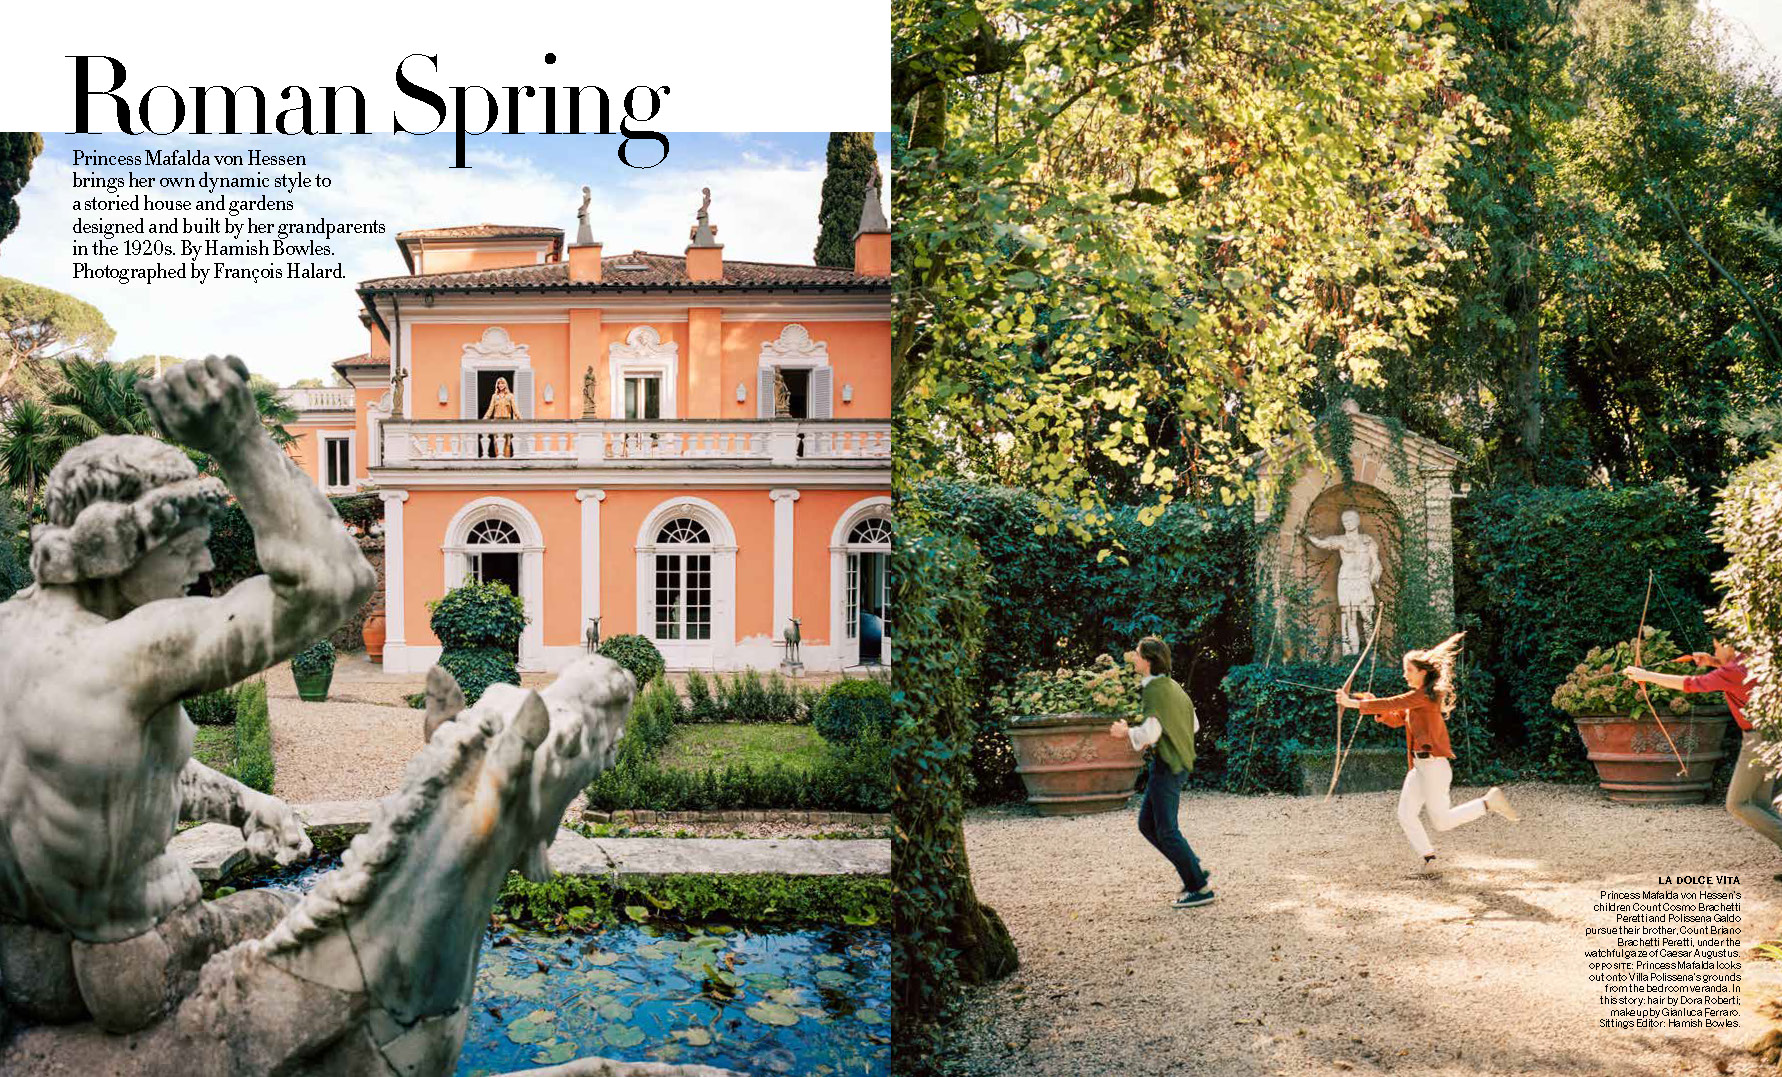 François Halard | Vogue US: Roman Spring, Princess Mafalda Von Hessen house | 1